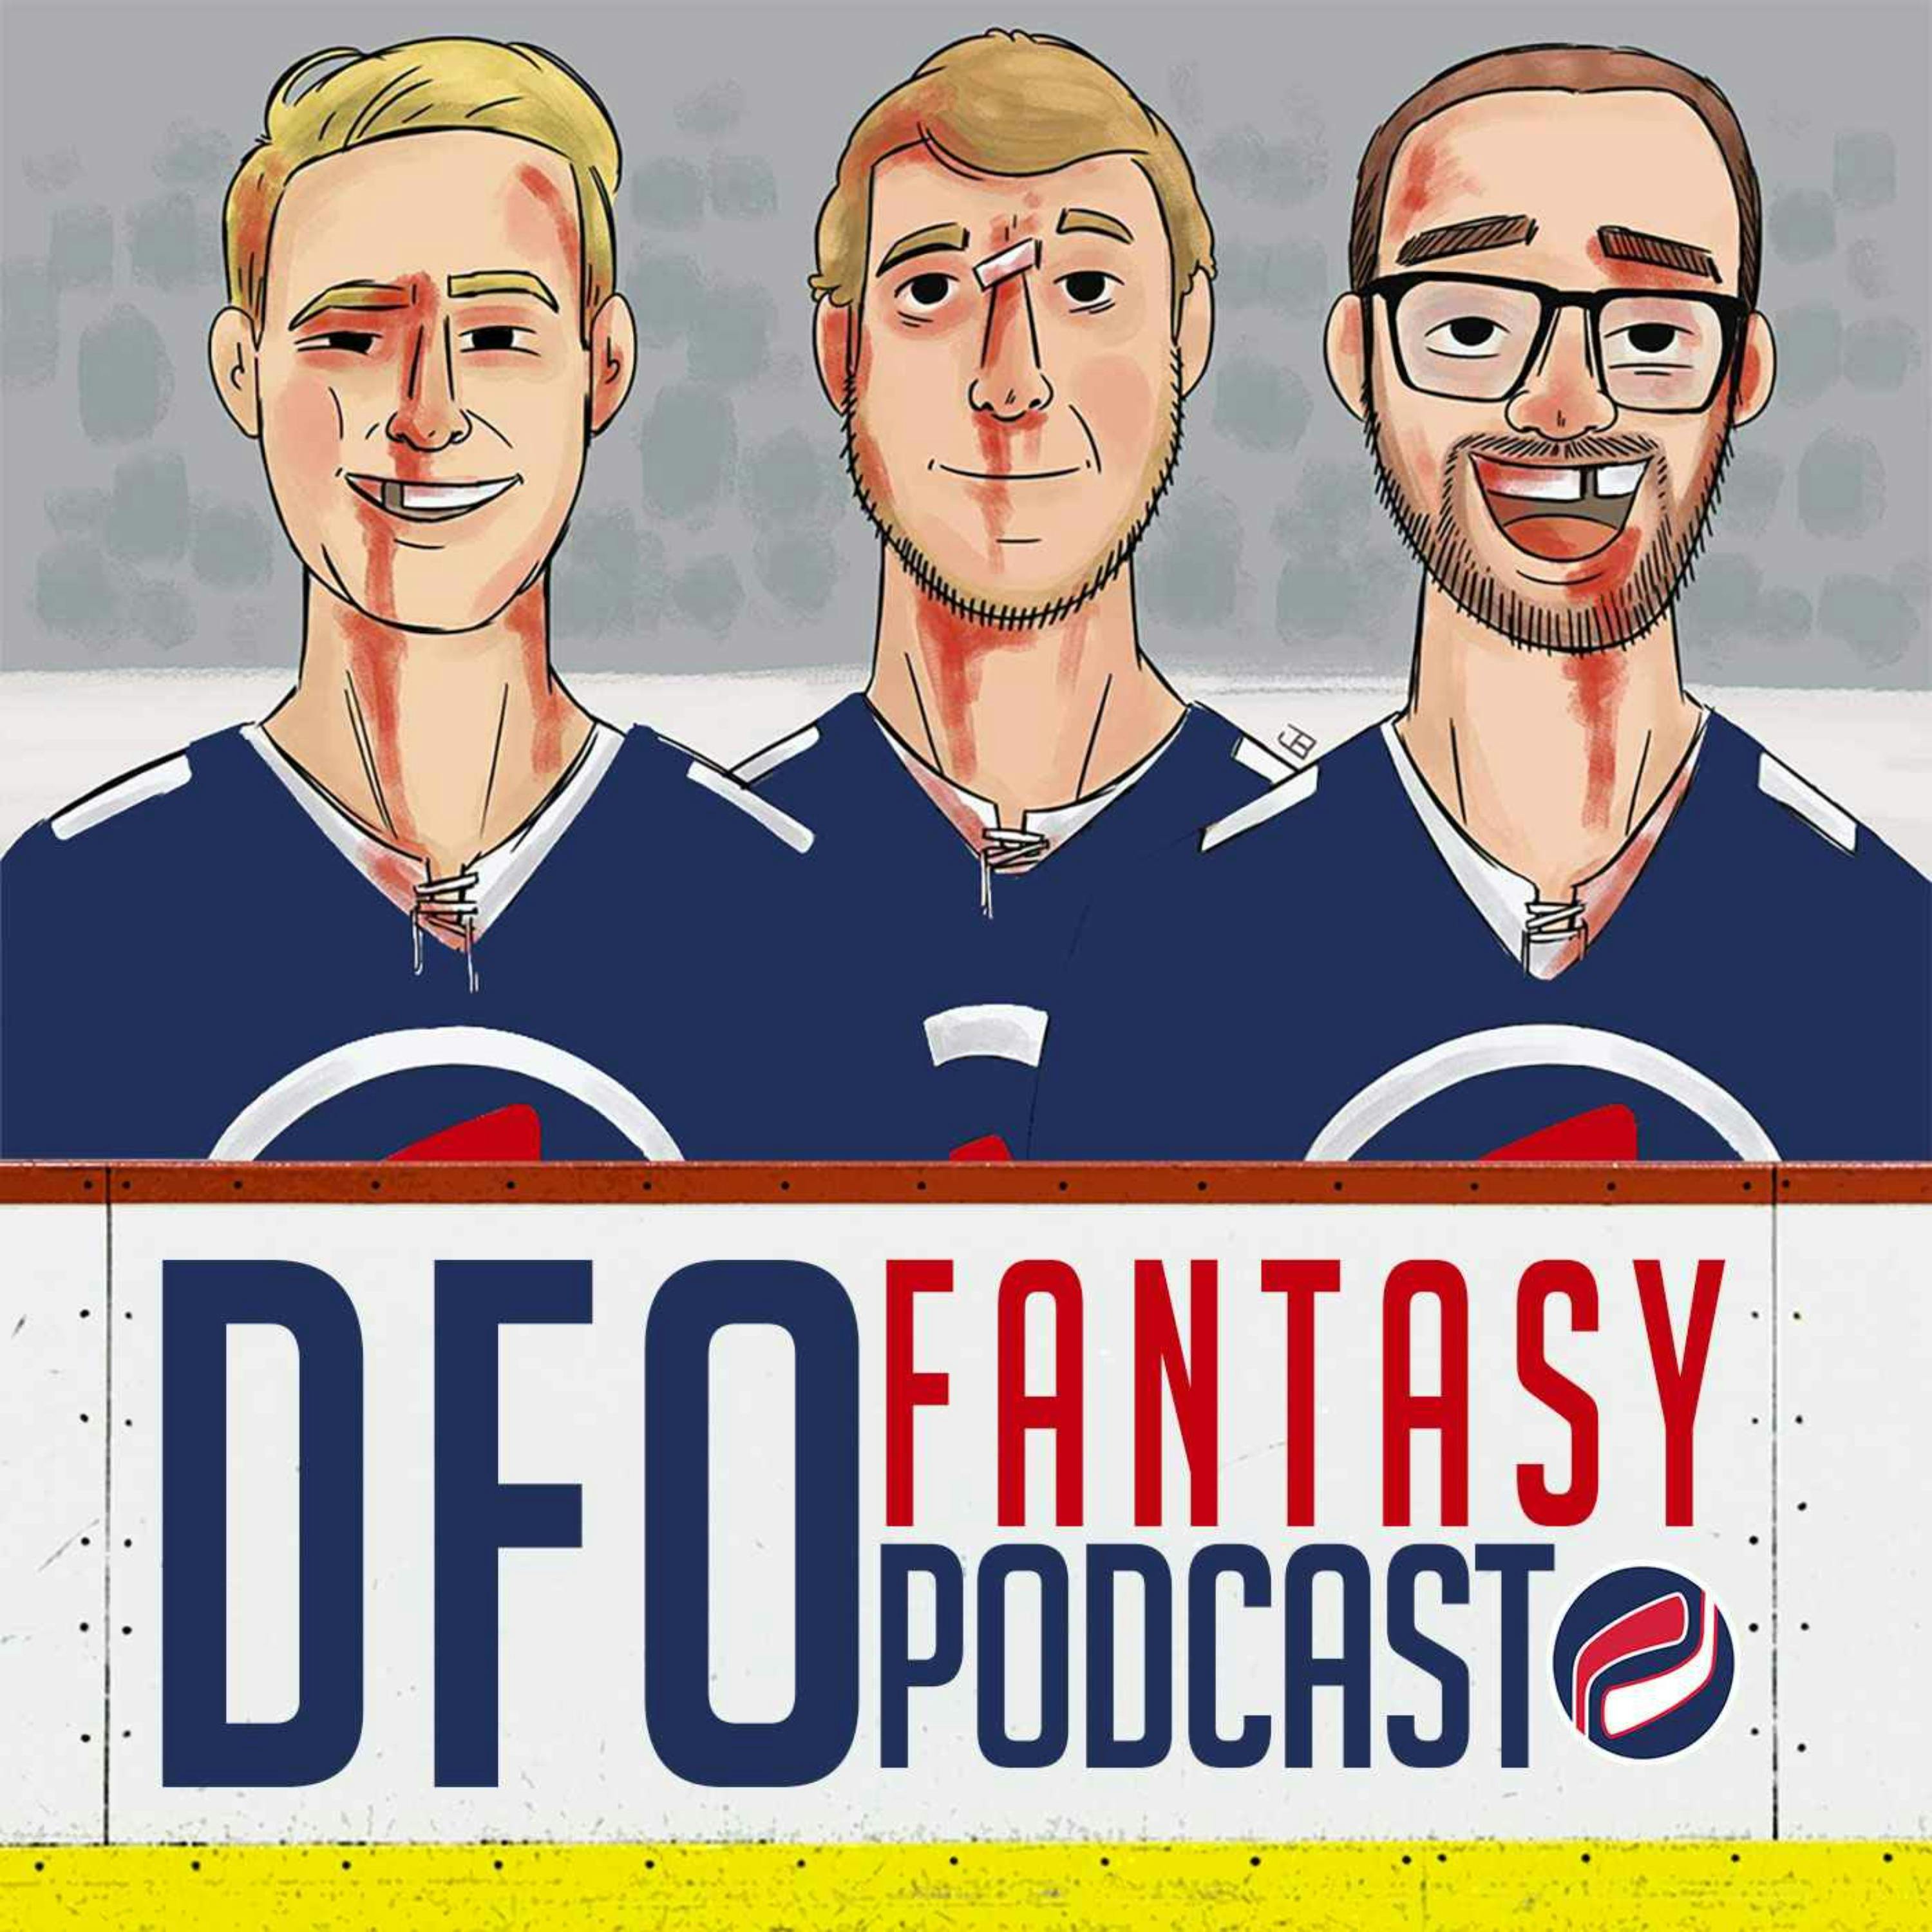 DFO Fantasy Podcast